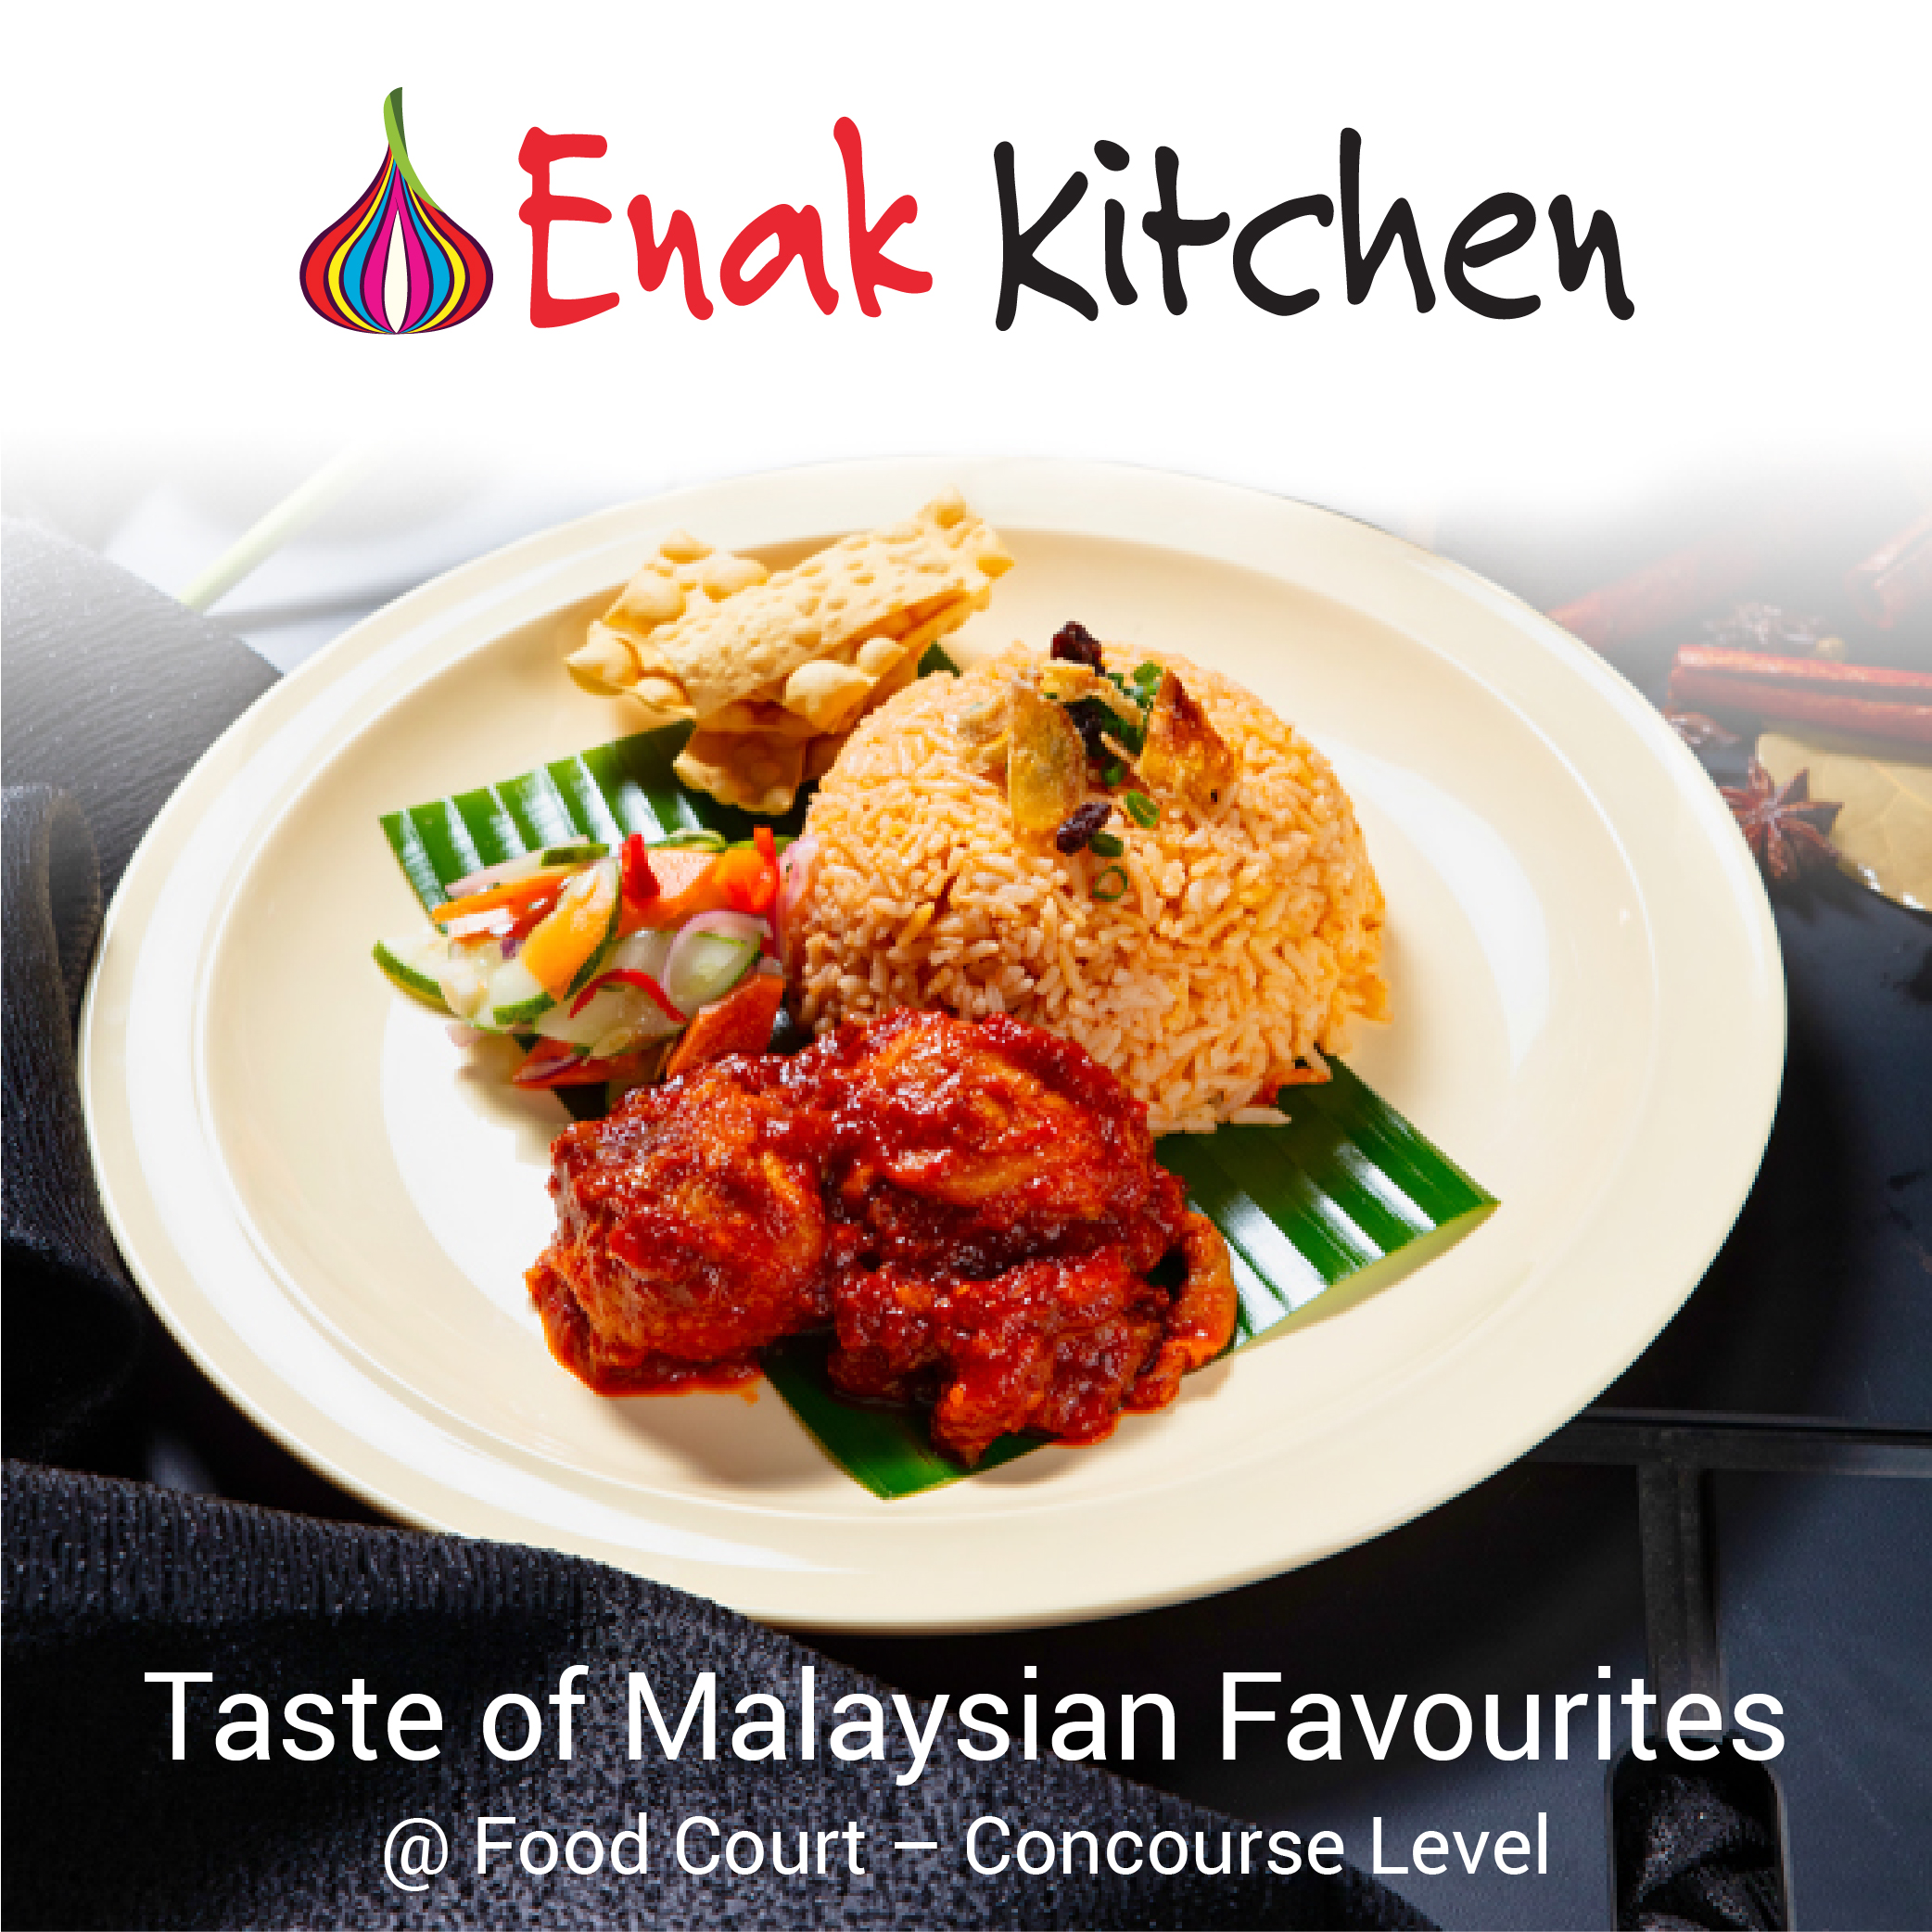 Taste of Malaysian Favorites